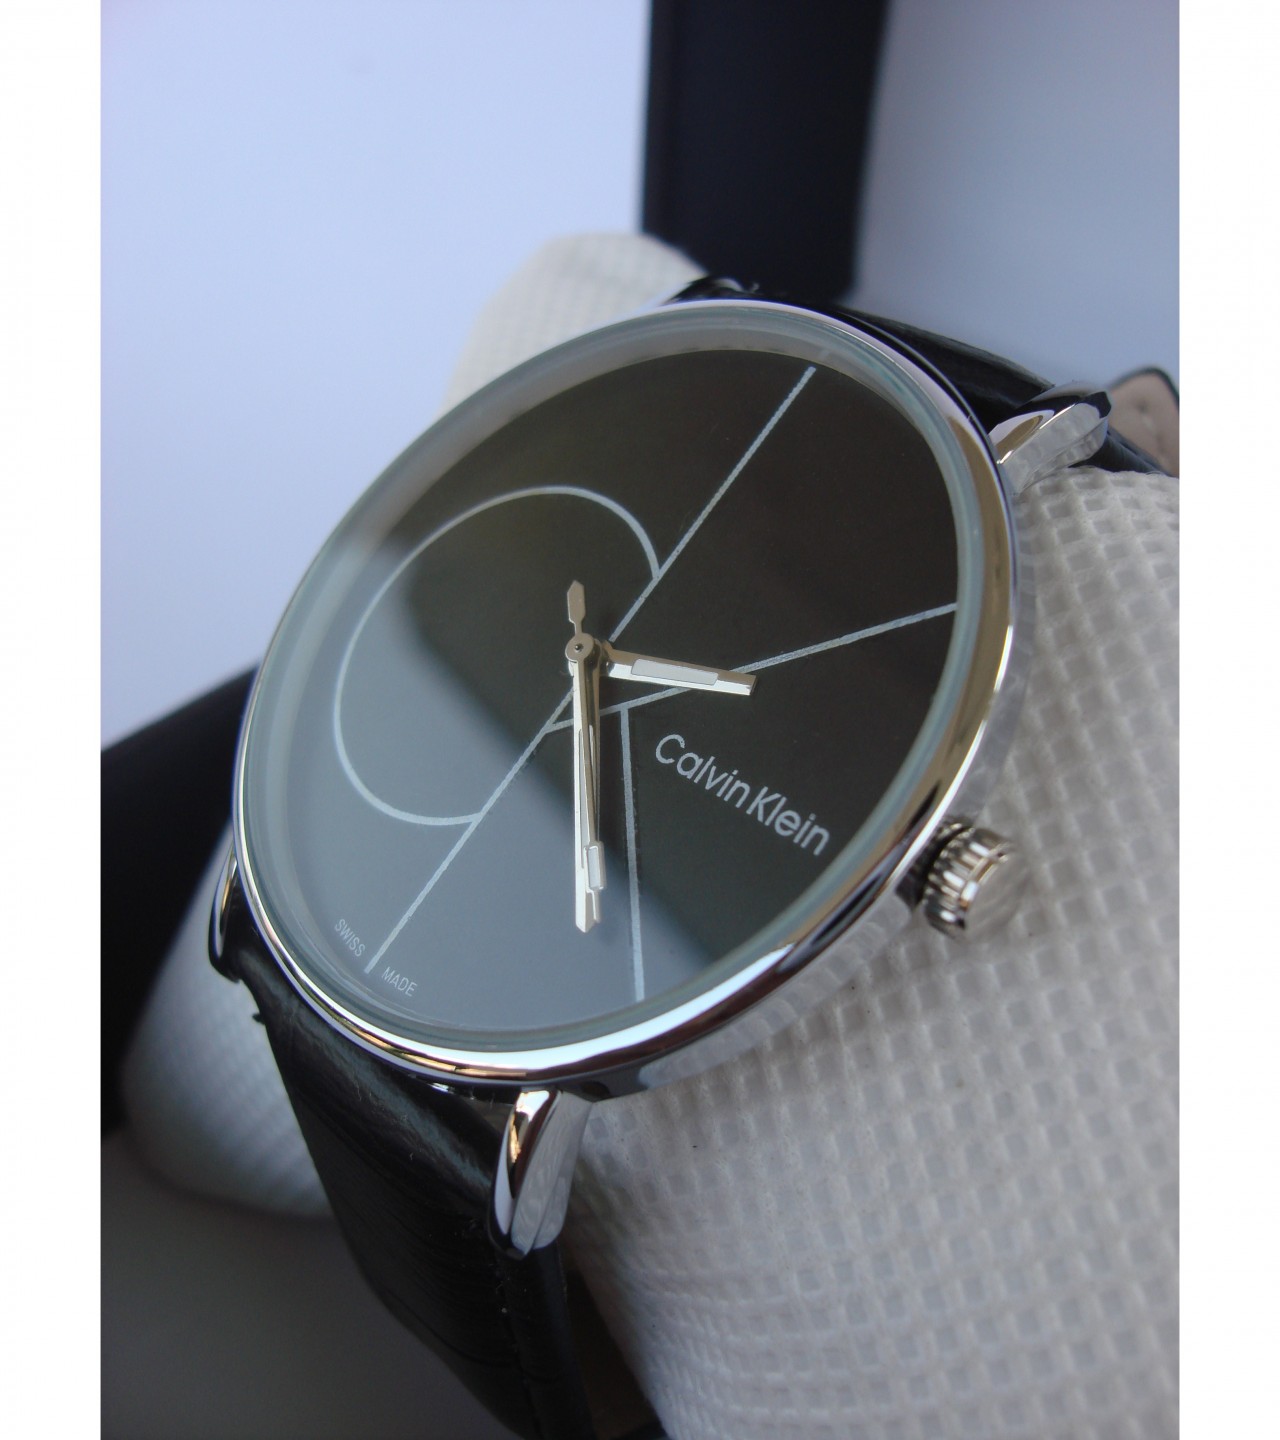 Cool wrist watch for men (GW-061)